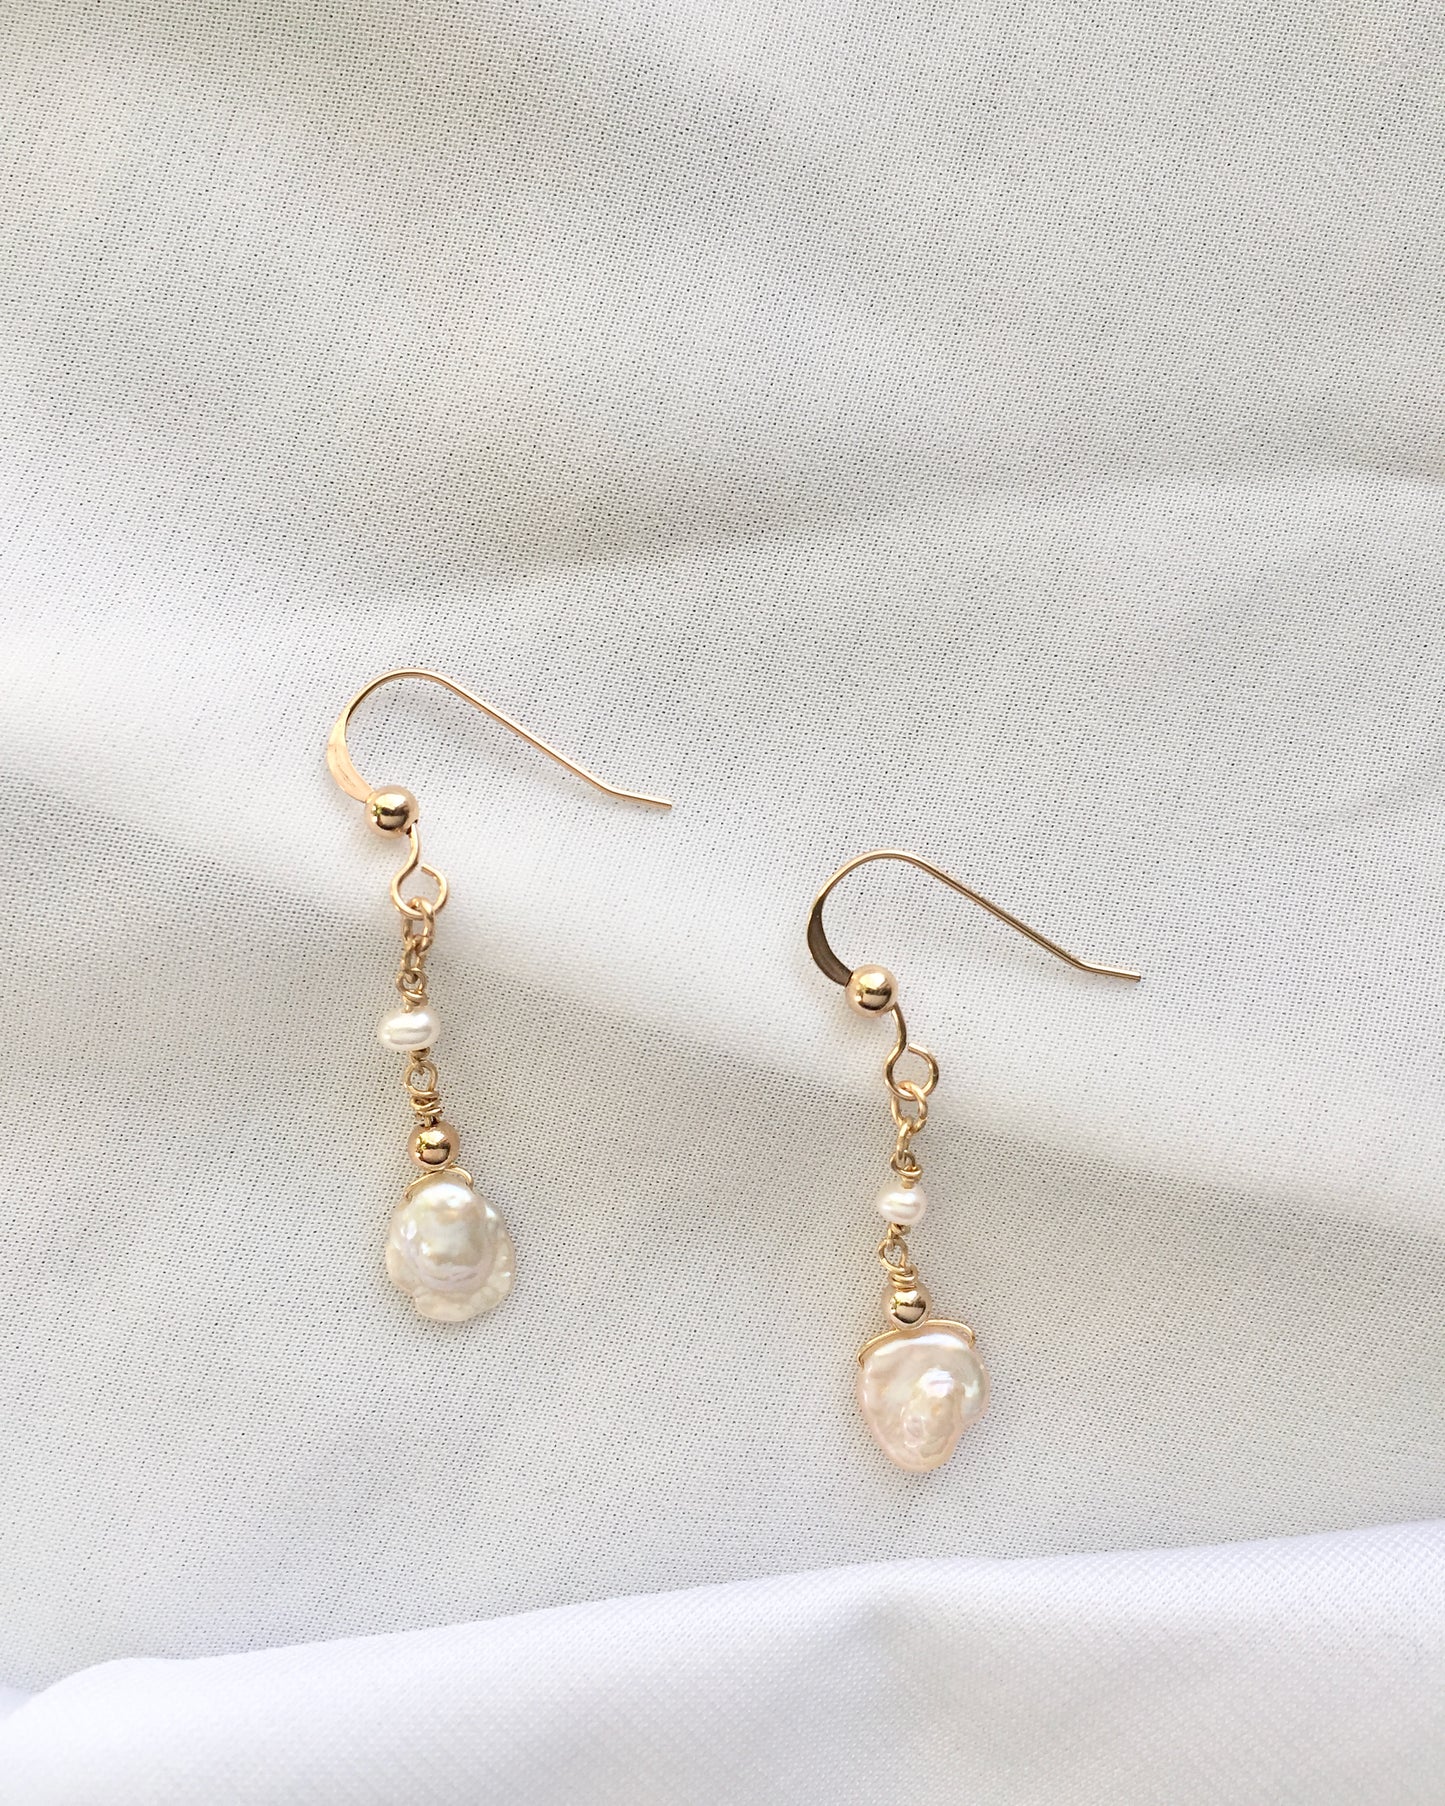 Organic Pearl Drop Earrings | Pearl Drop Statement Earrings | Organic Pearl Dangle Earrings in Gold Filled or Sterling Silver | IB Jewelry